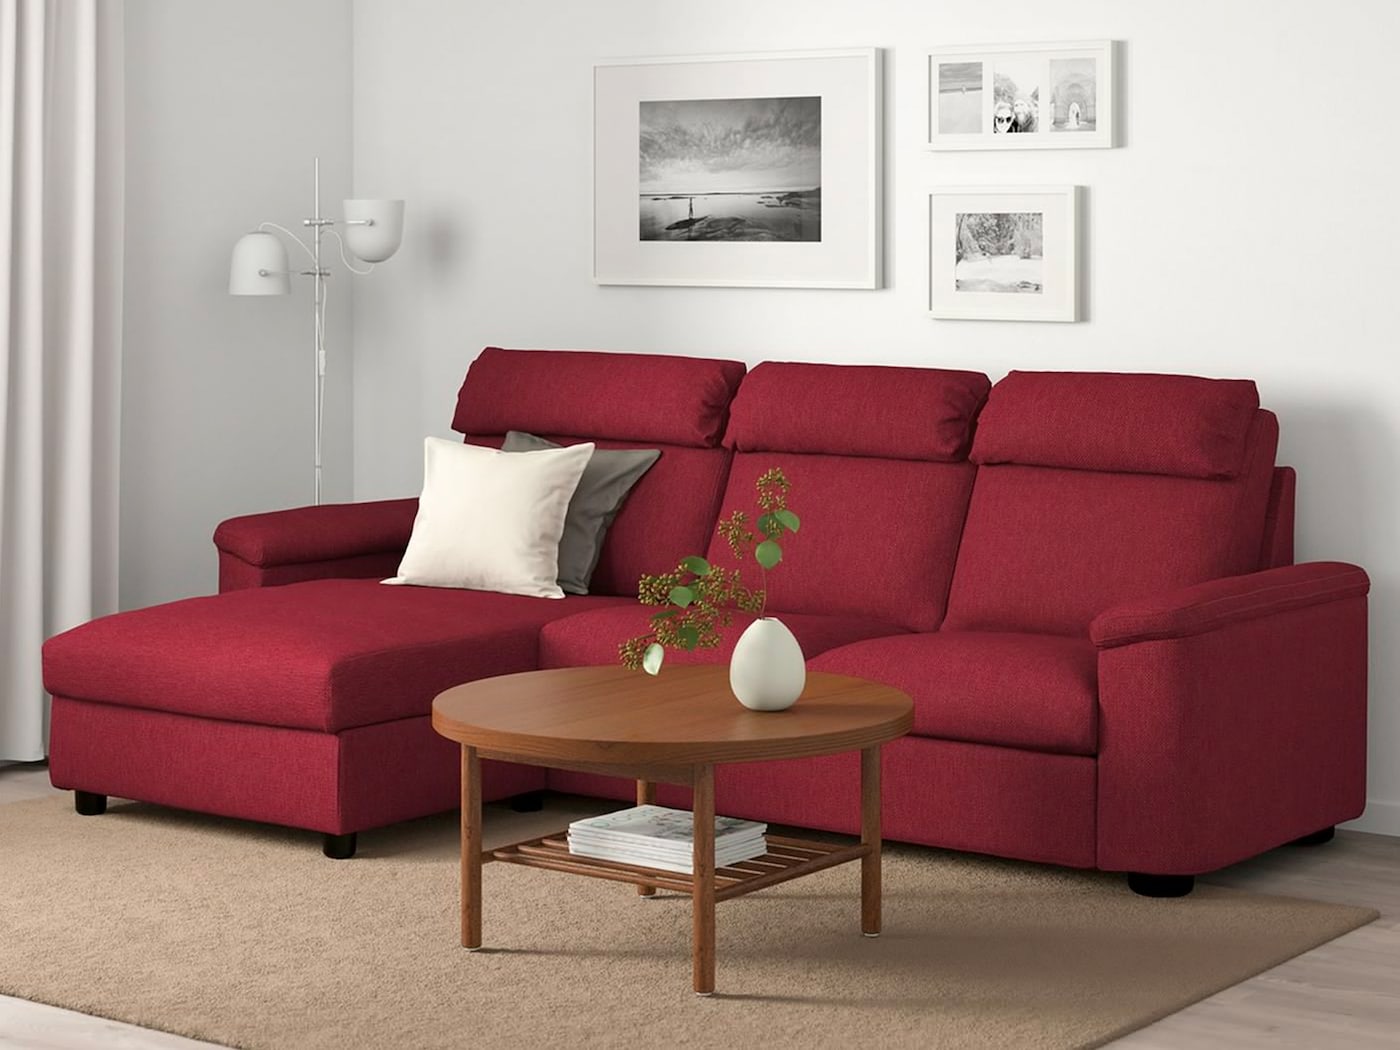 high durable and elegant design sofa